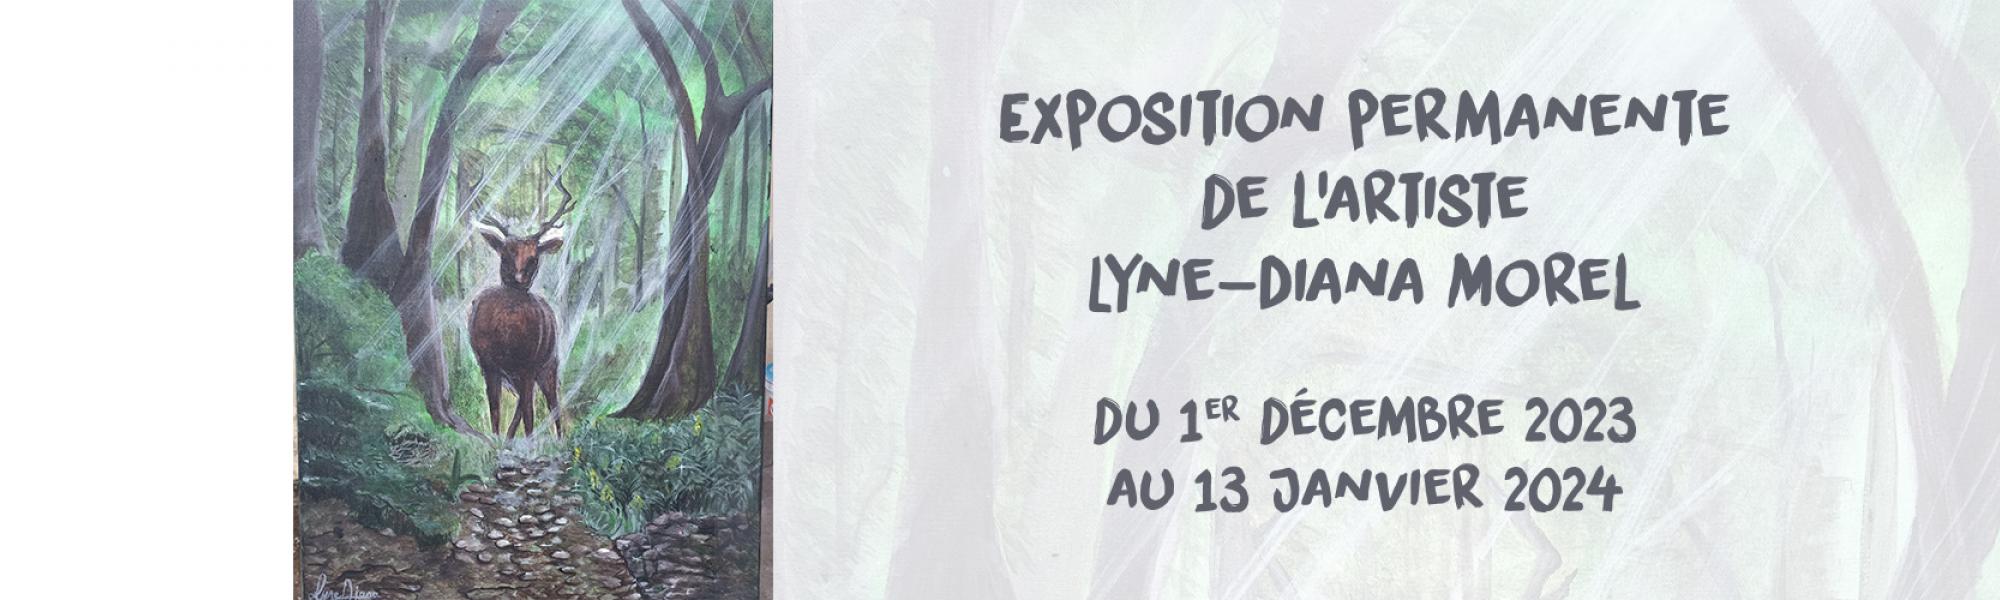 Bandeau exposition permanente de l'artiste Lyne-Diana Morel